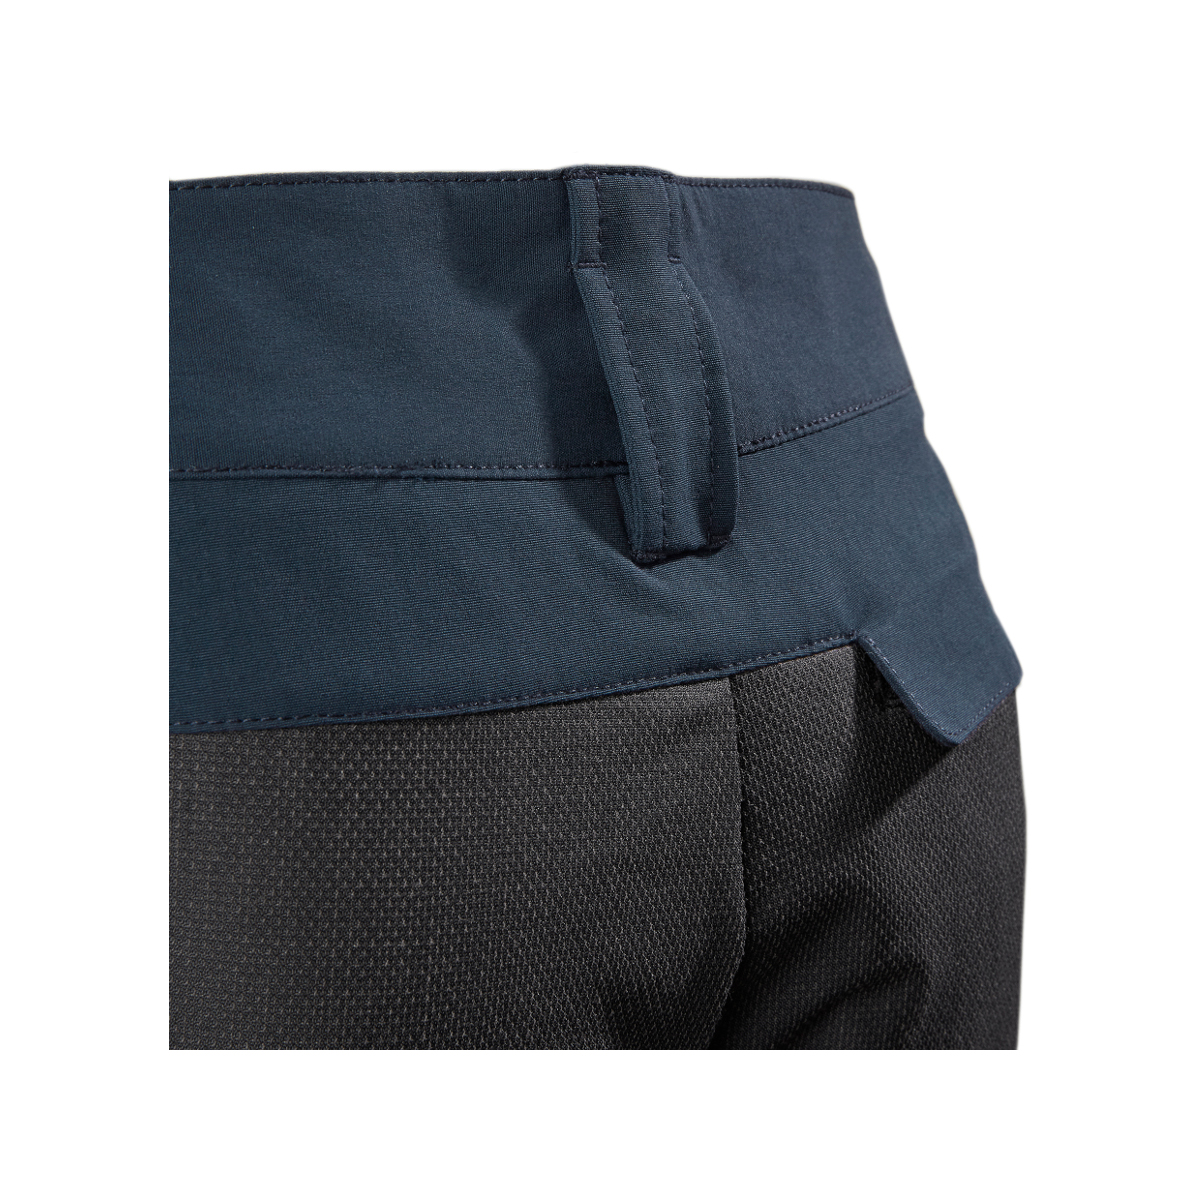 Musto Evolution Performance pantalon 2.0 bleu marine, taille 38